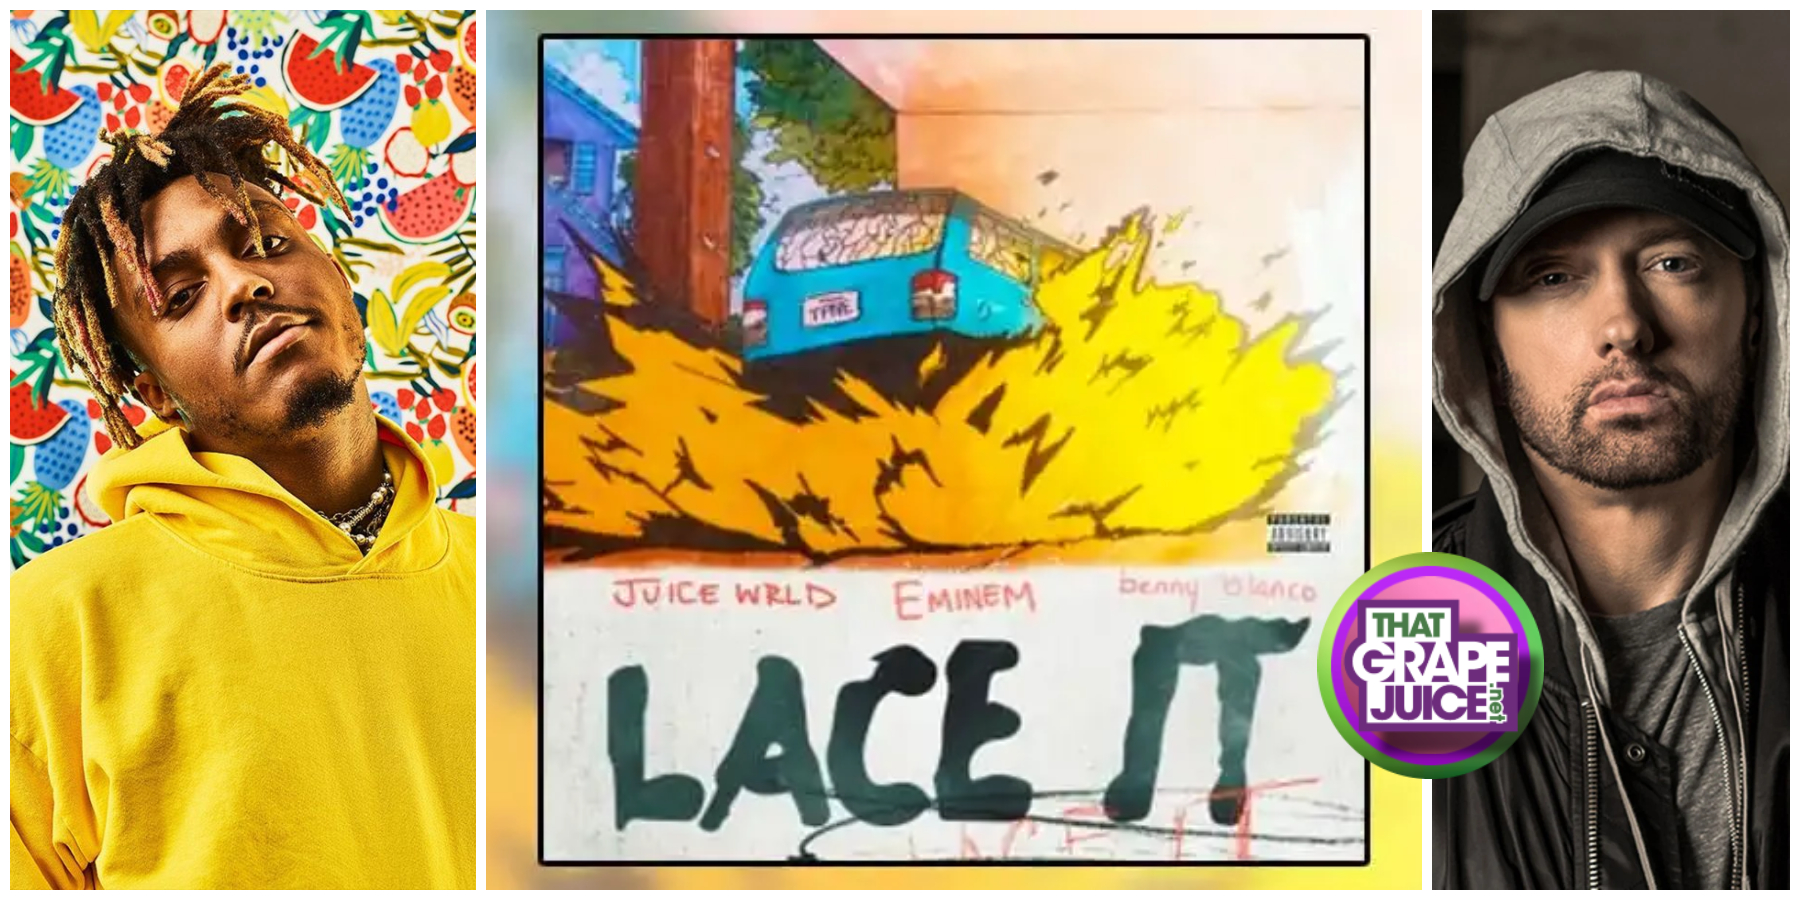 Juice WRLD, Eminem & benny blanco - Lace It (Official Audio) 